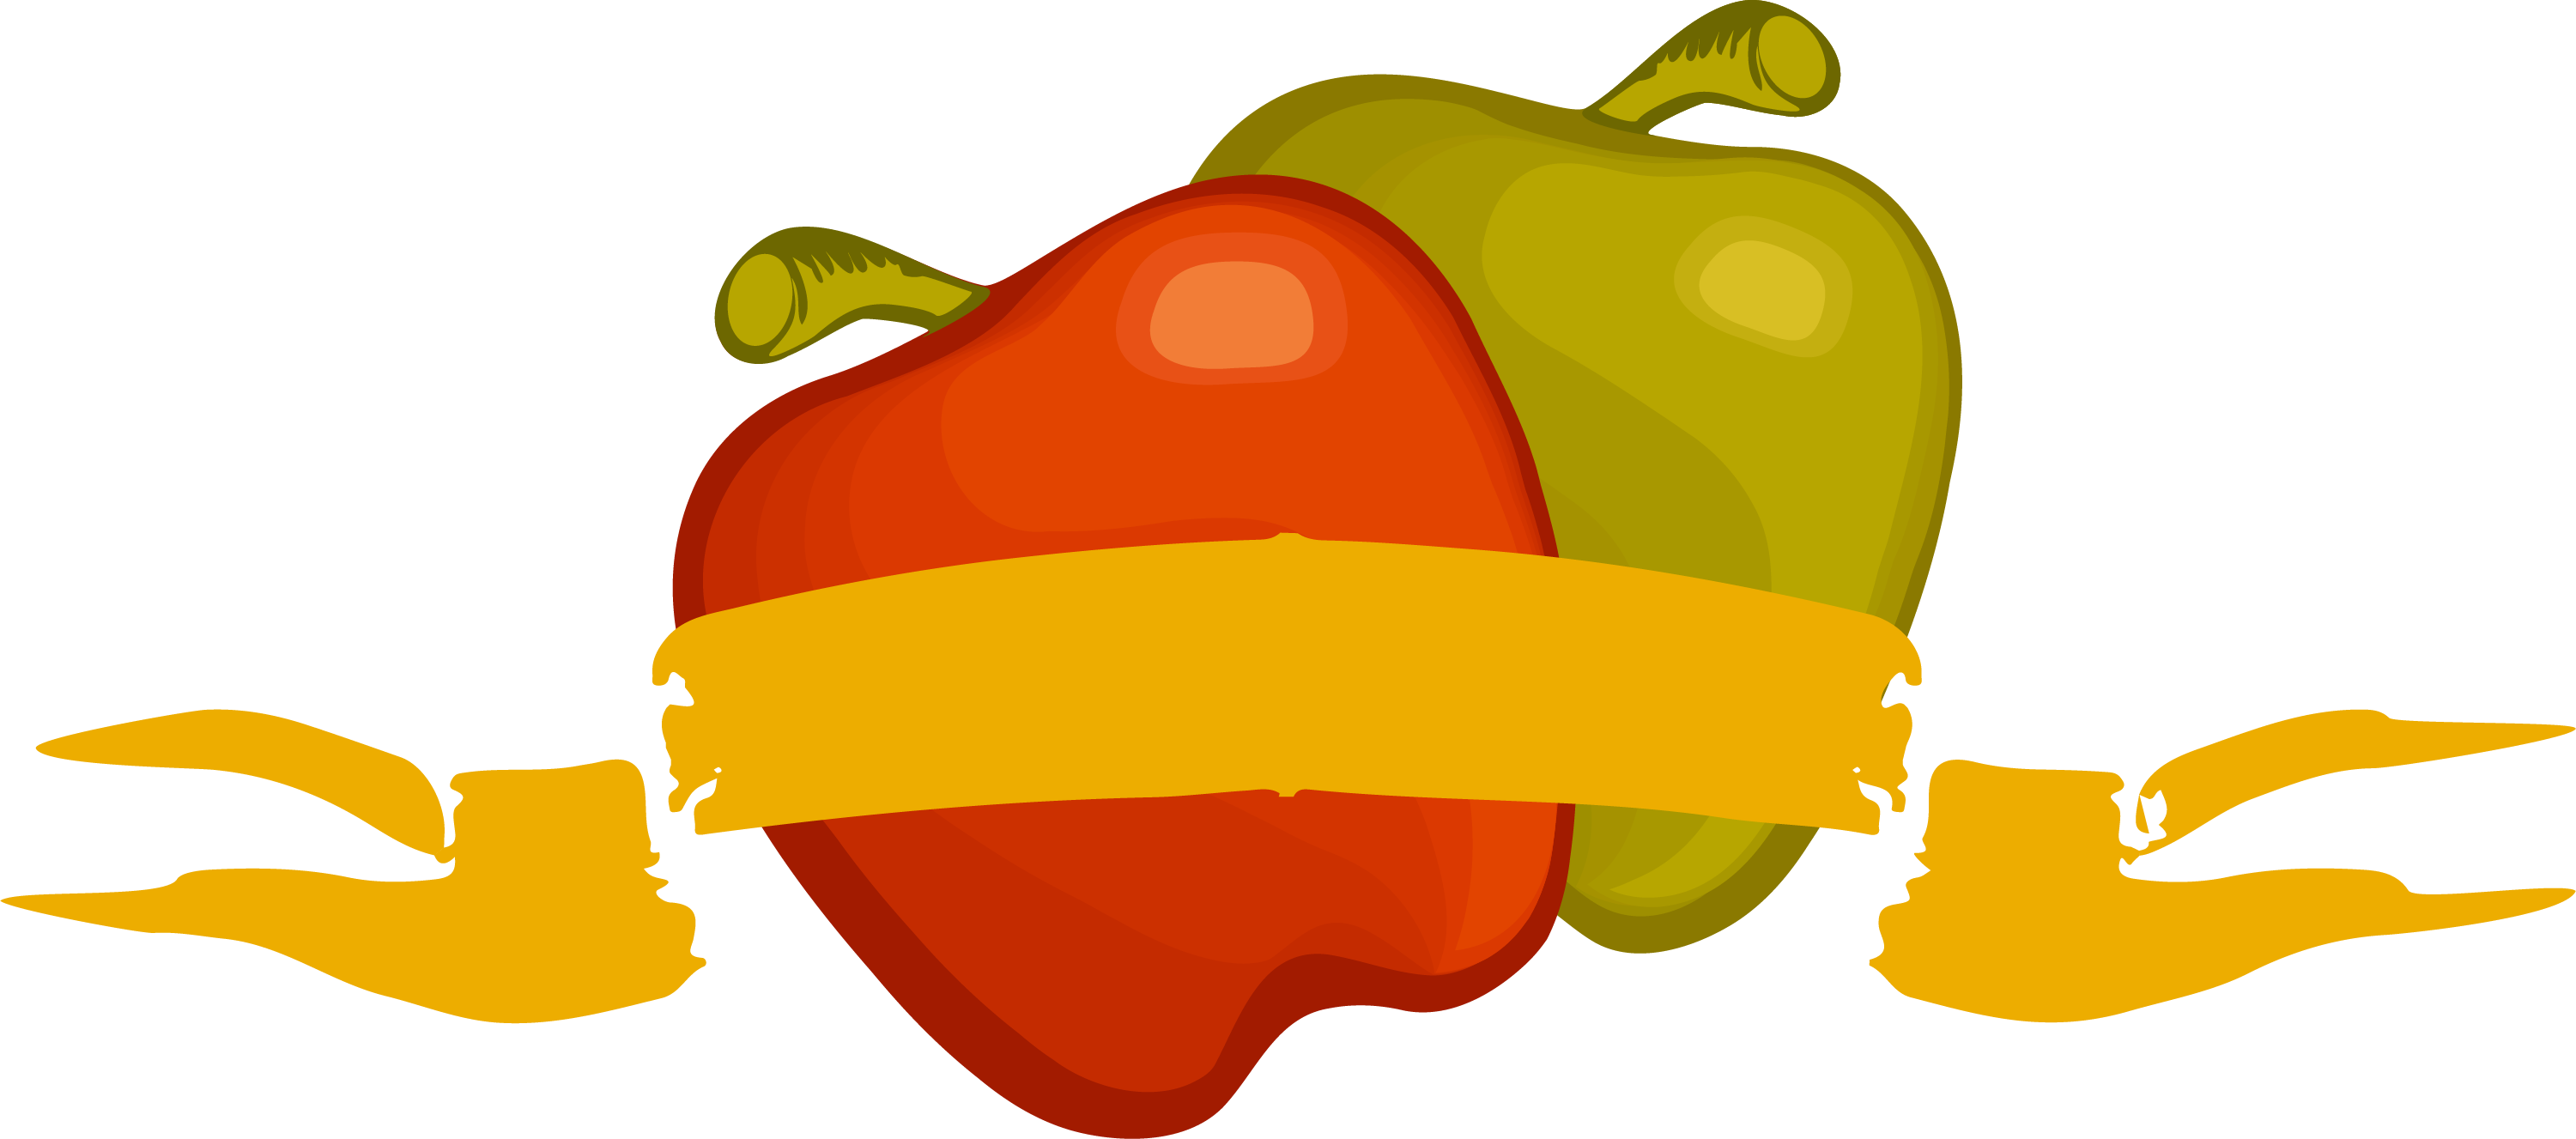 Apple Chili Pepper Clip Art - Apple Chili Pepper Clip Art (3001x1327)